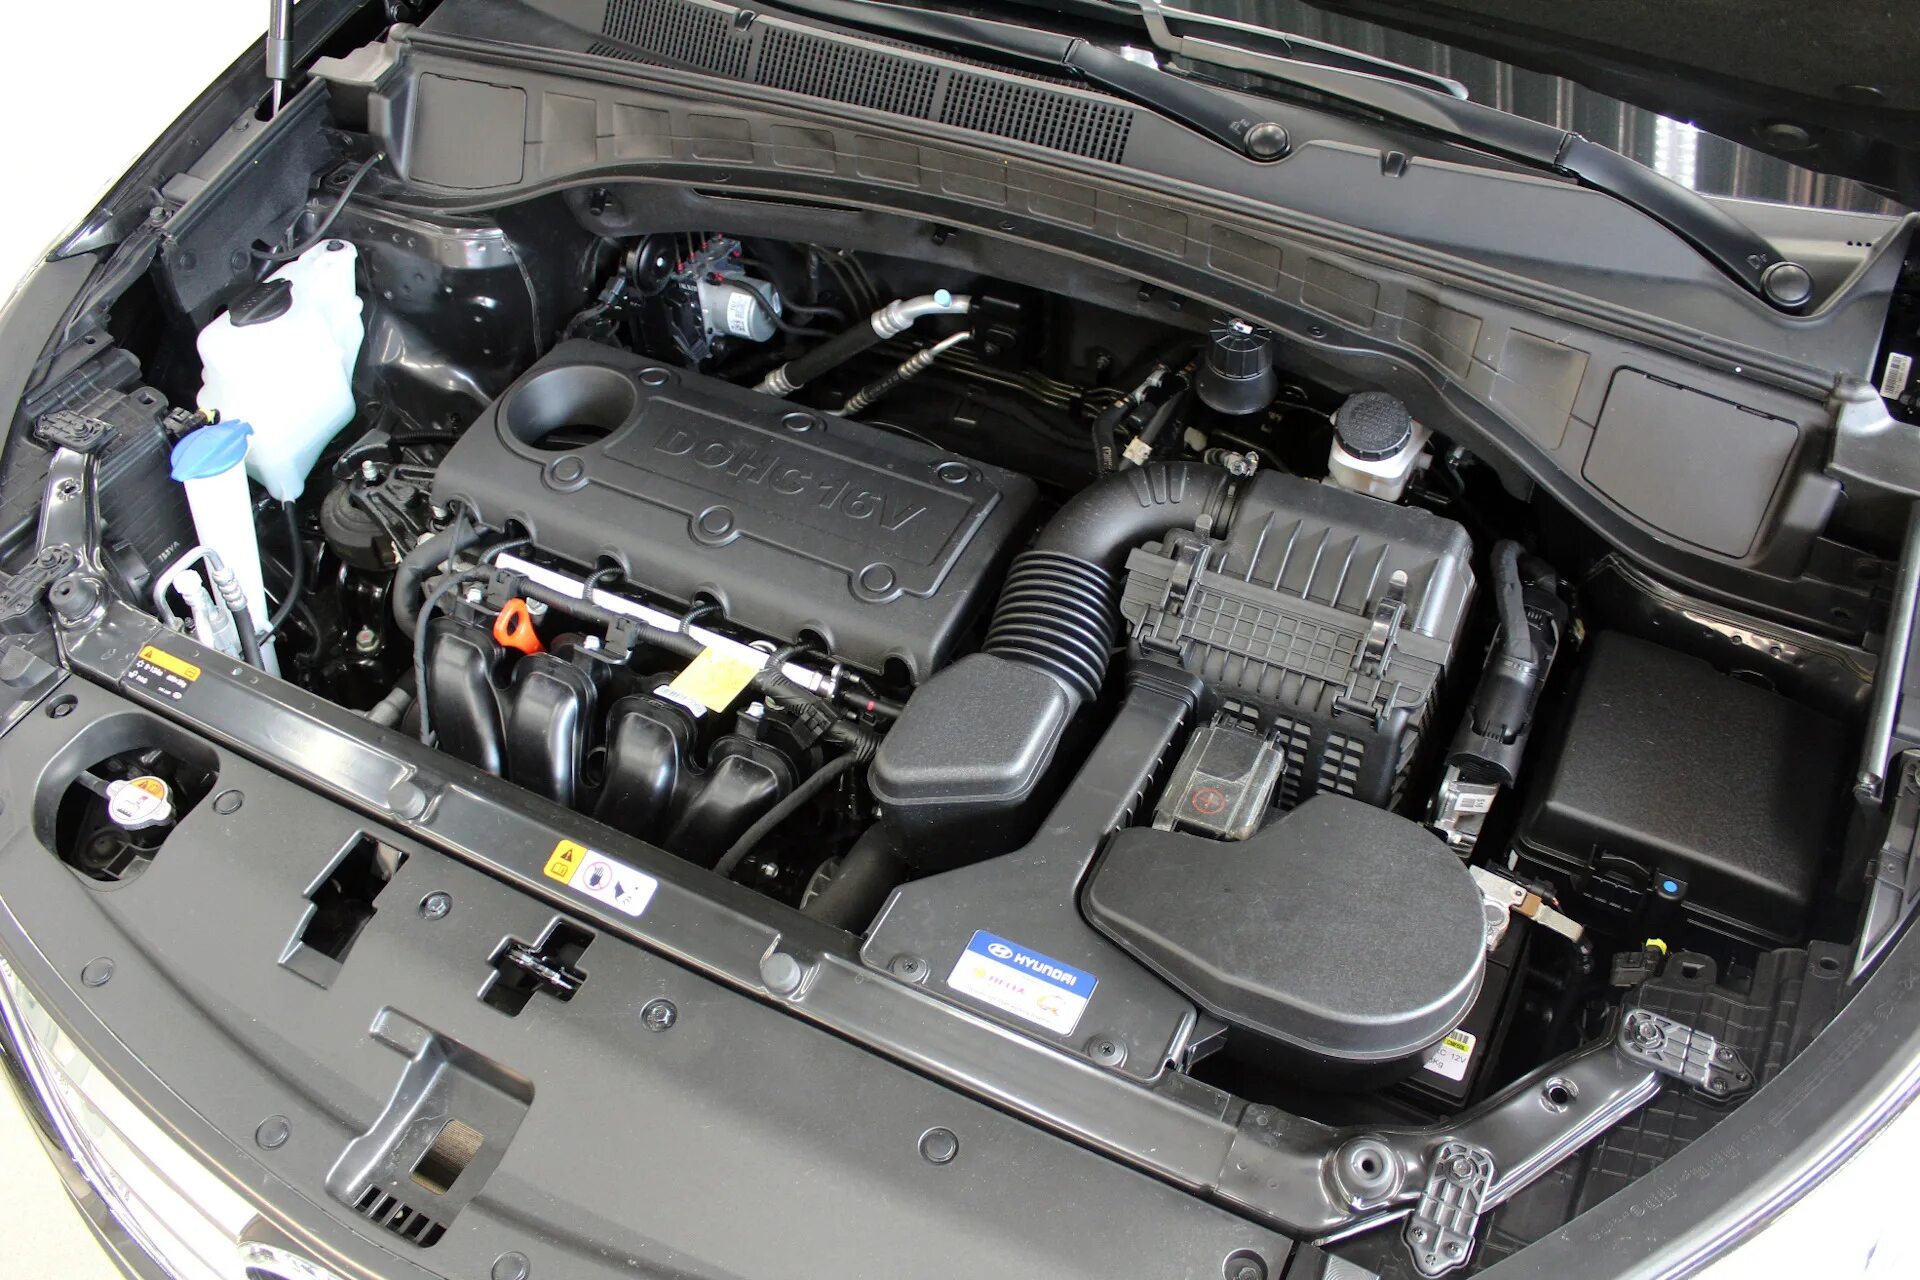 Kia Hyundai g4kd. Двигатель Kia-Hyundai g4kd. Проблемные моторы Киа Хюндай. Эндоскопия двигателя хёндай Киа.